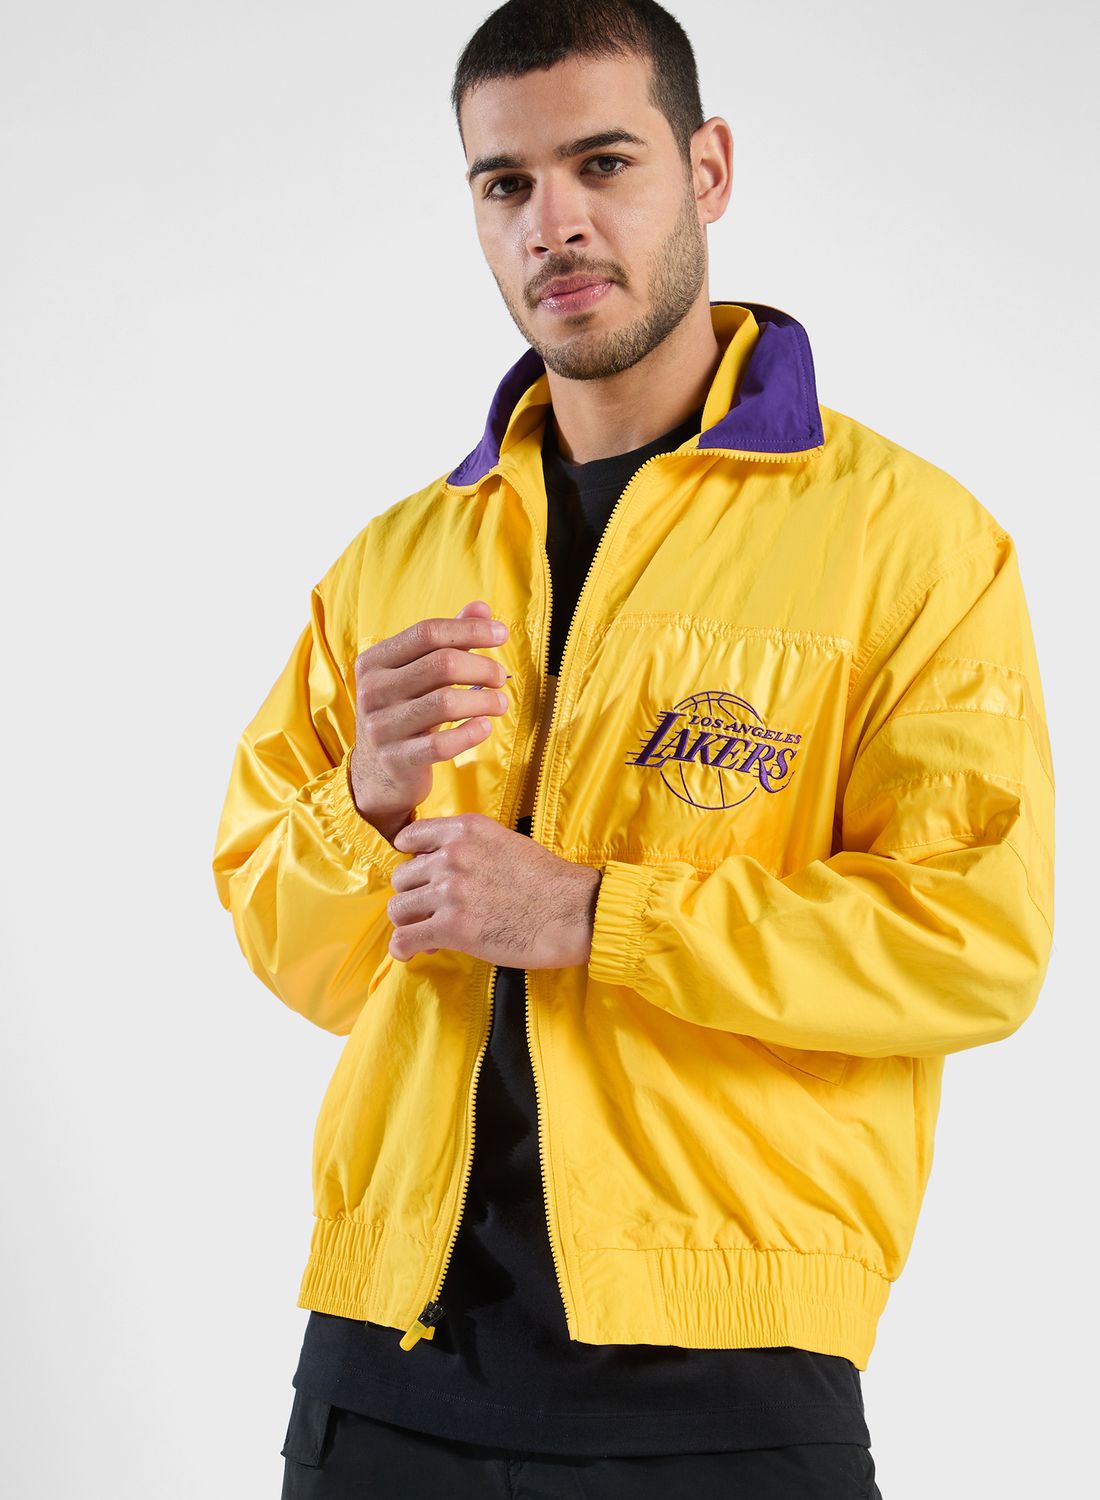 Nike / Men's Los Angeles Lakers Yellow Jacket